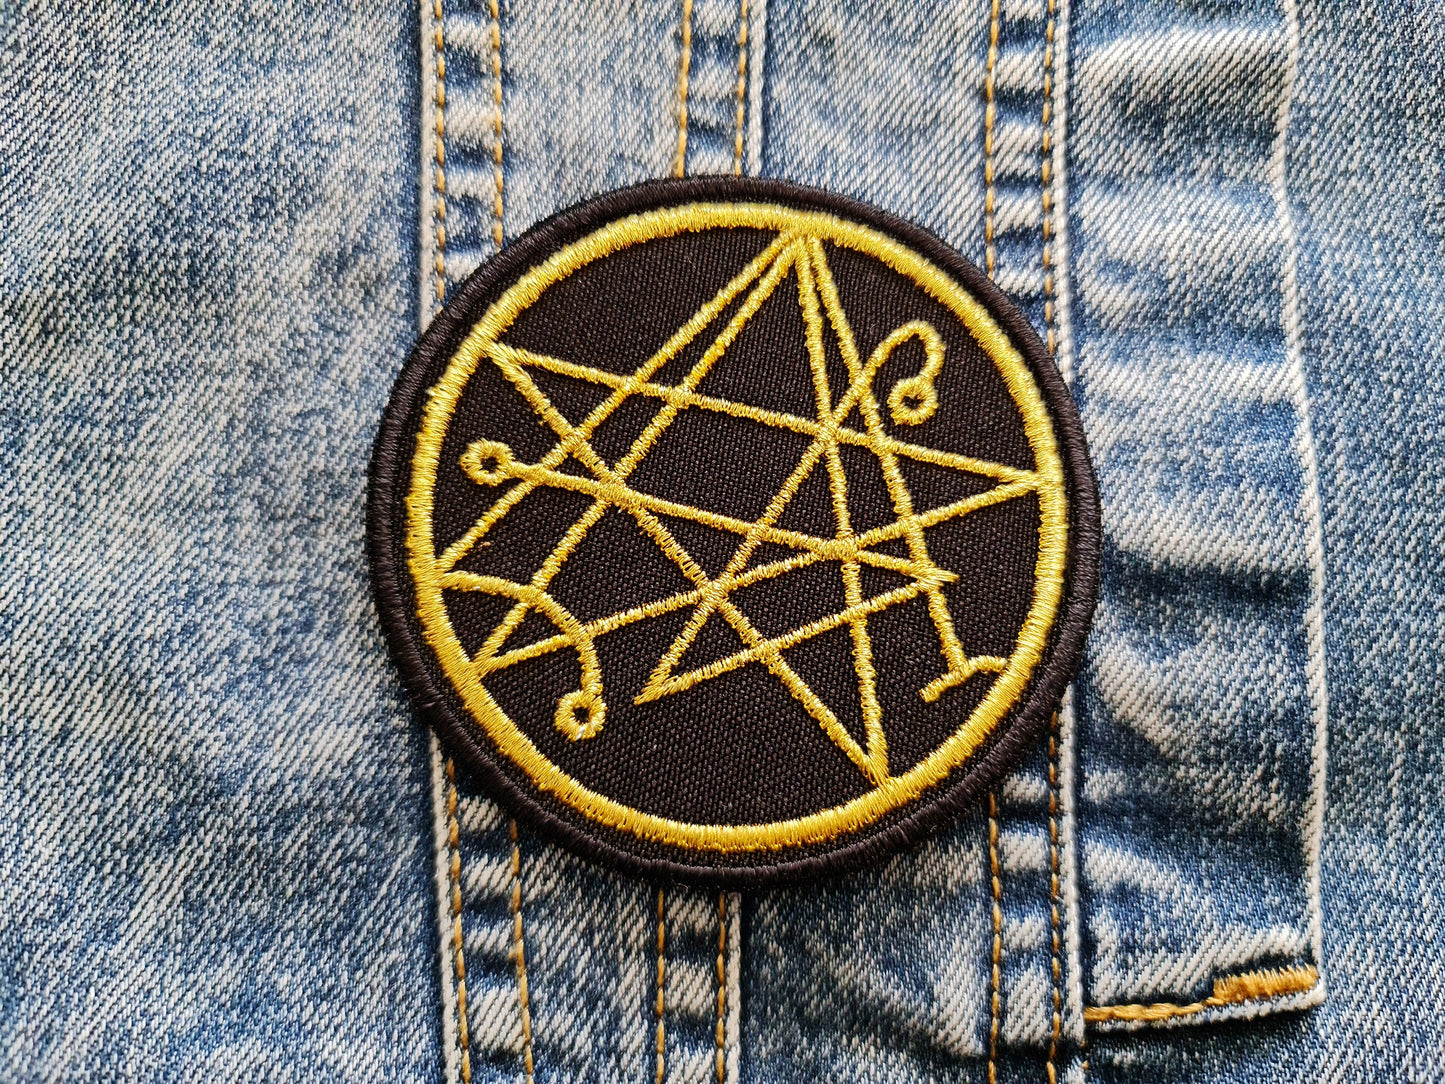 - Necronomicon Symbol Embroidered Patch